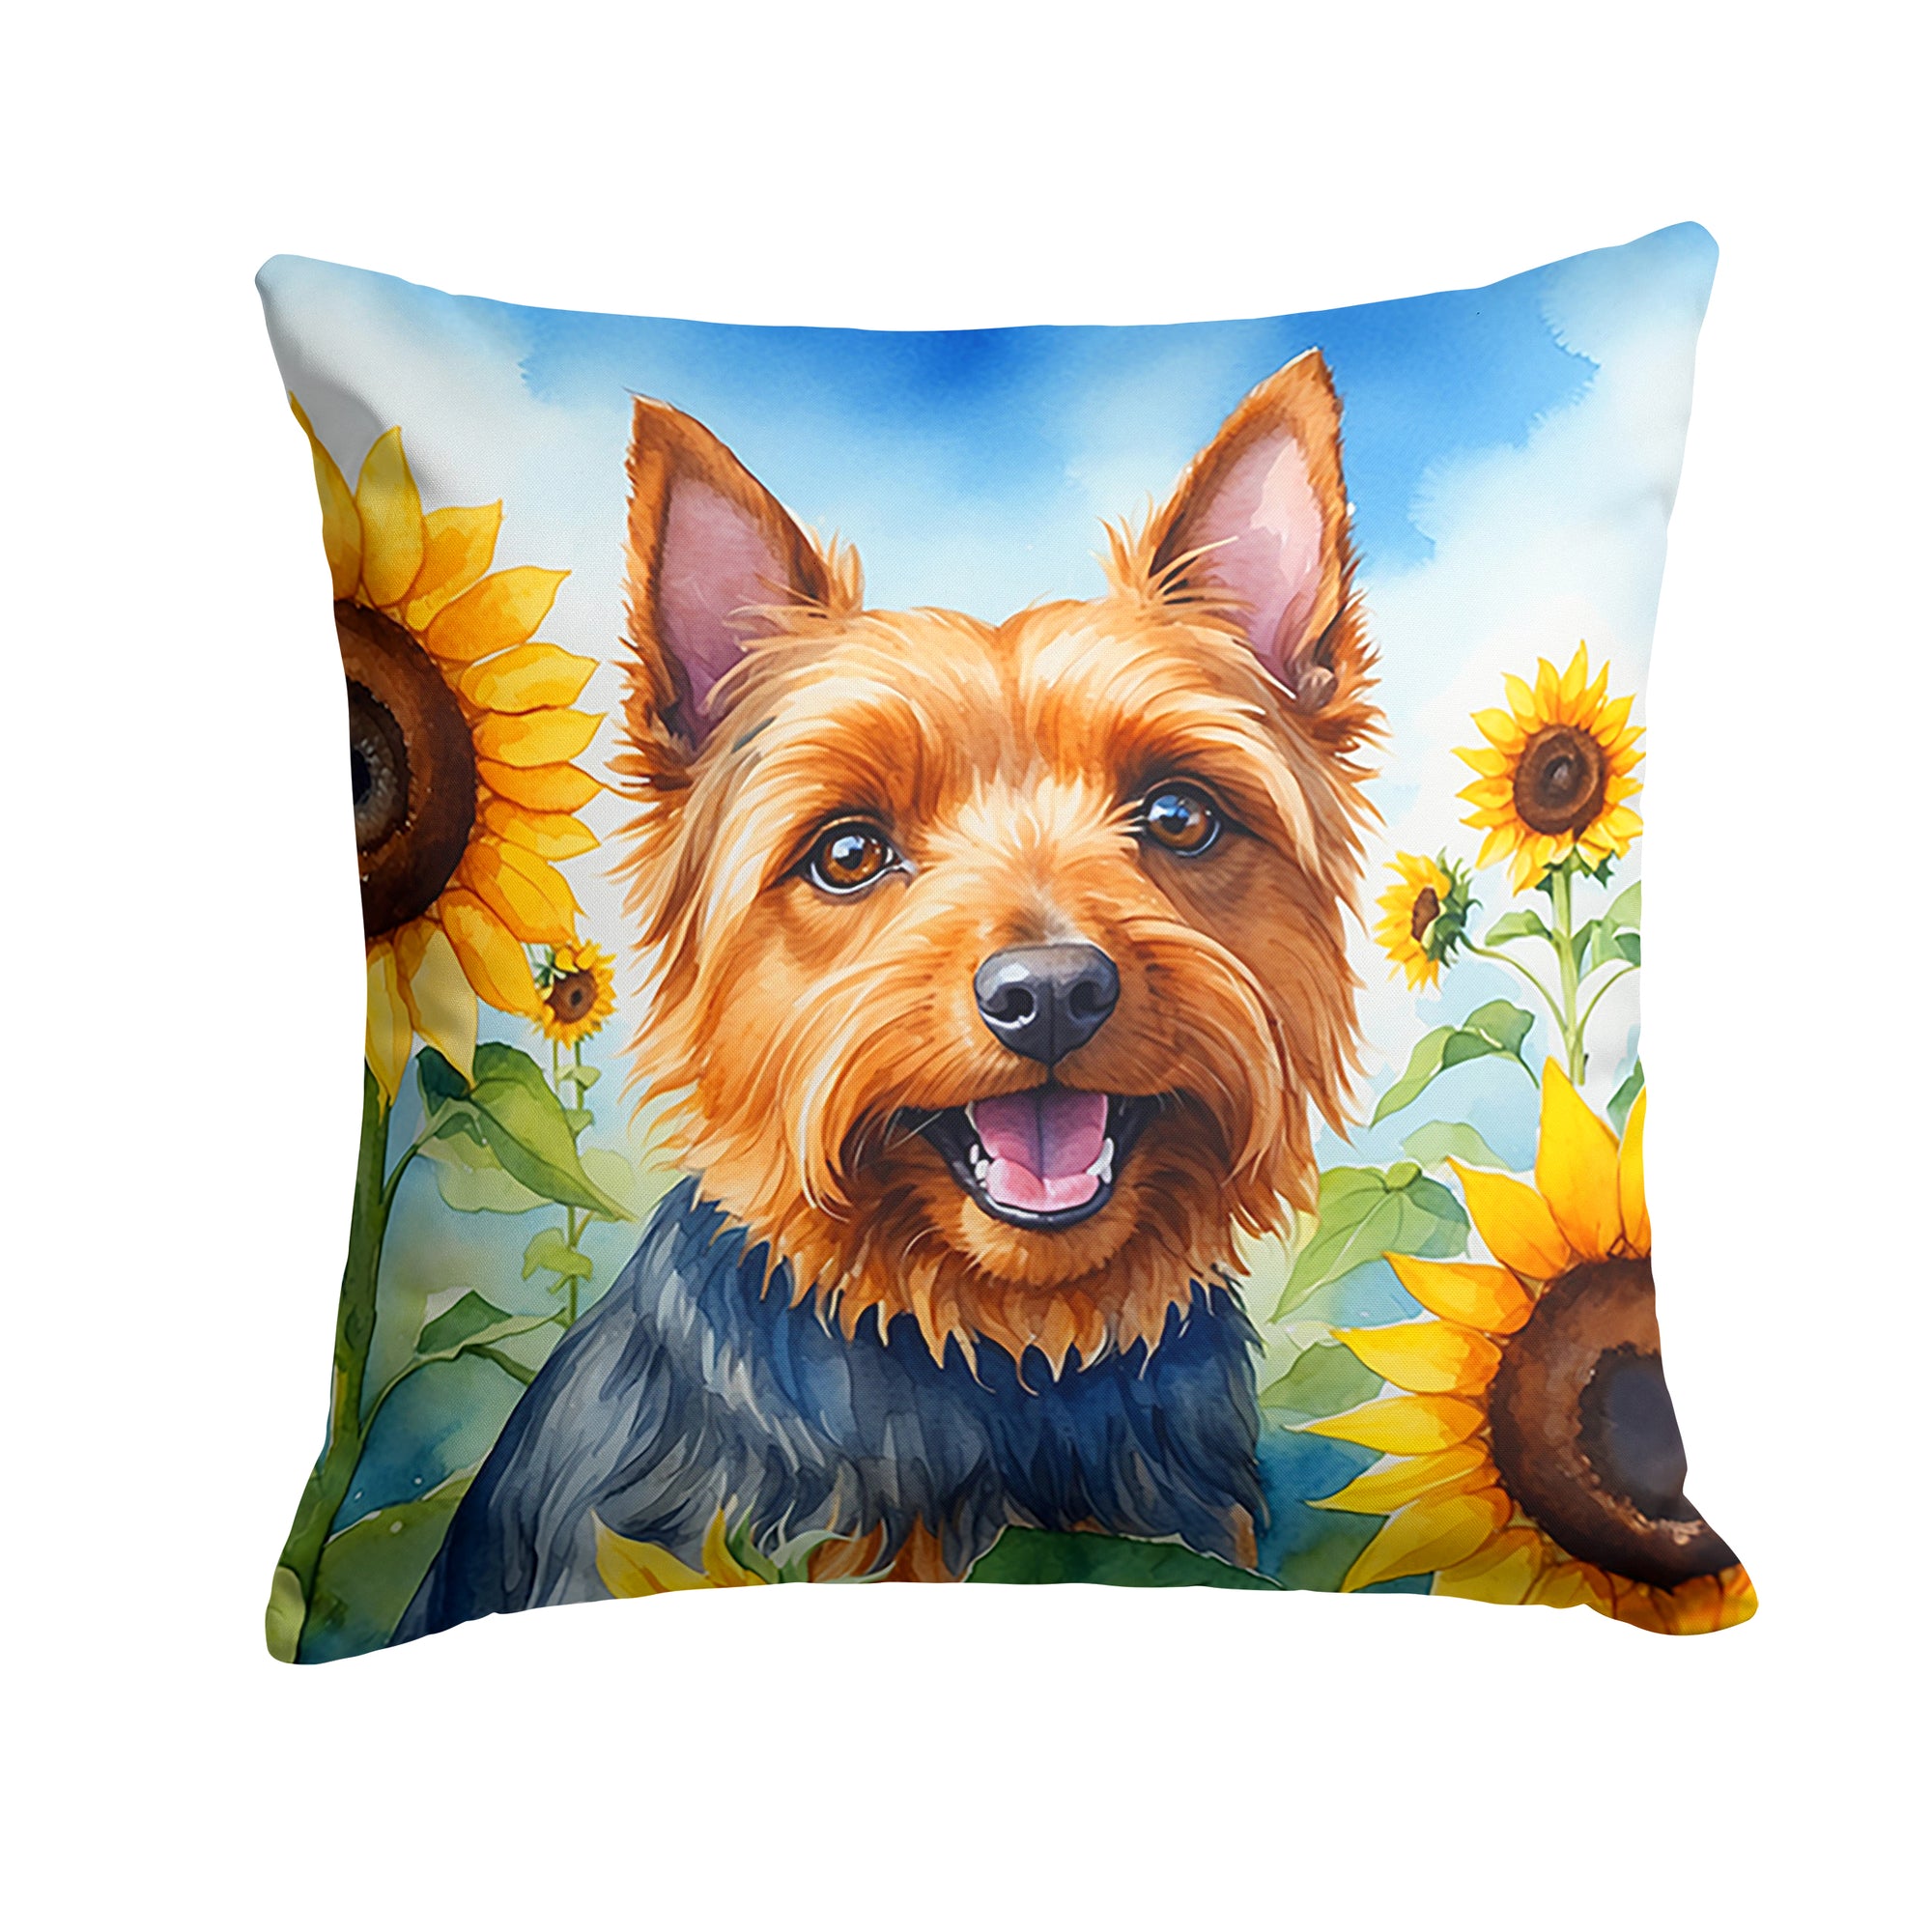 Buy this Australian Terrier in Sunflowers Throw Pillow